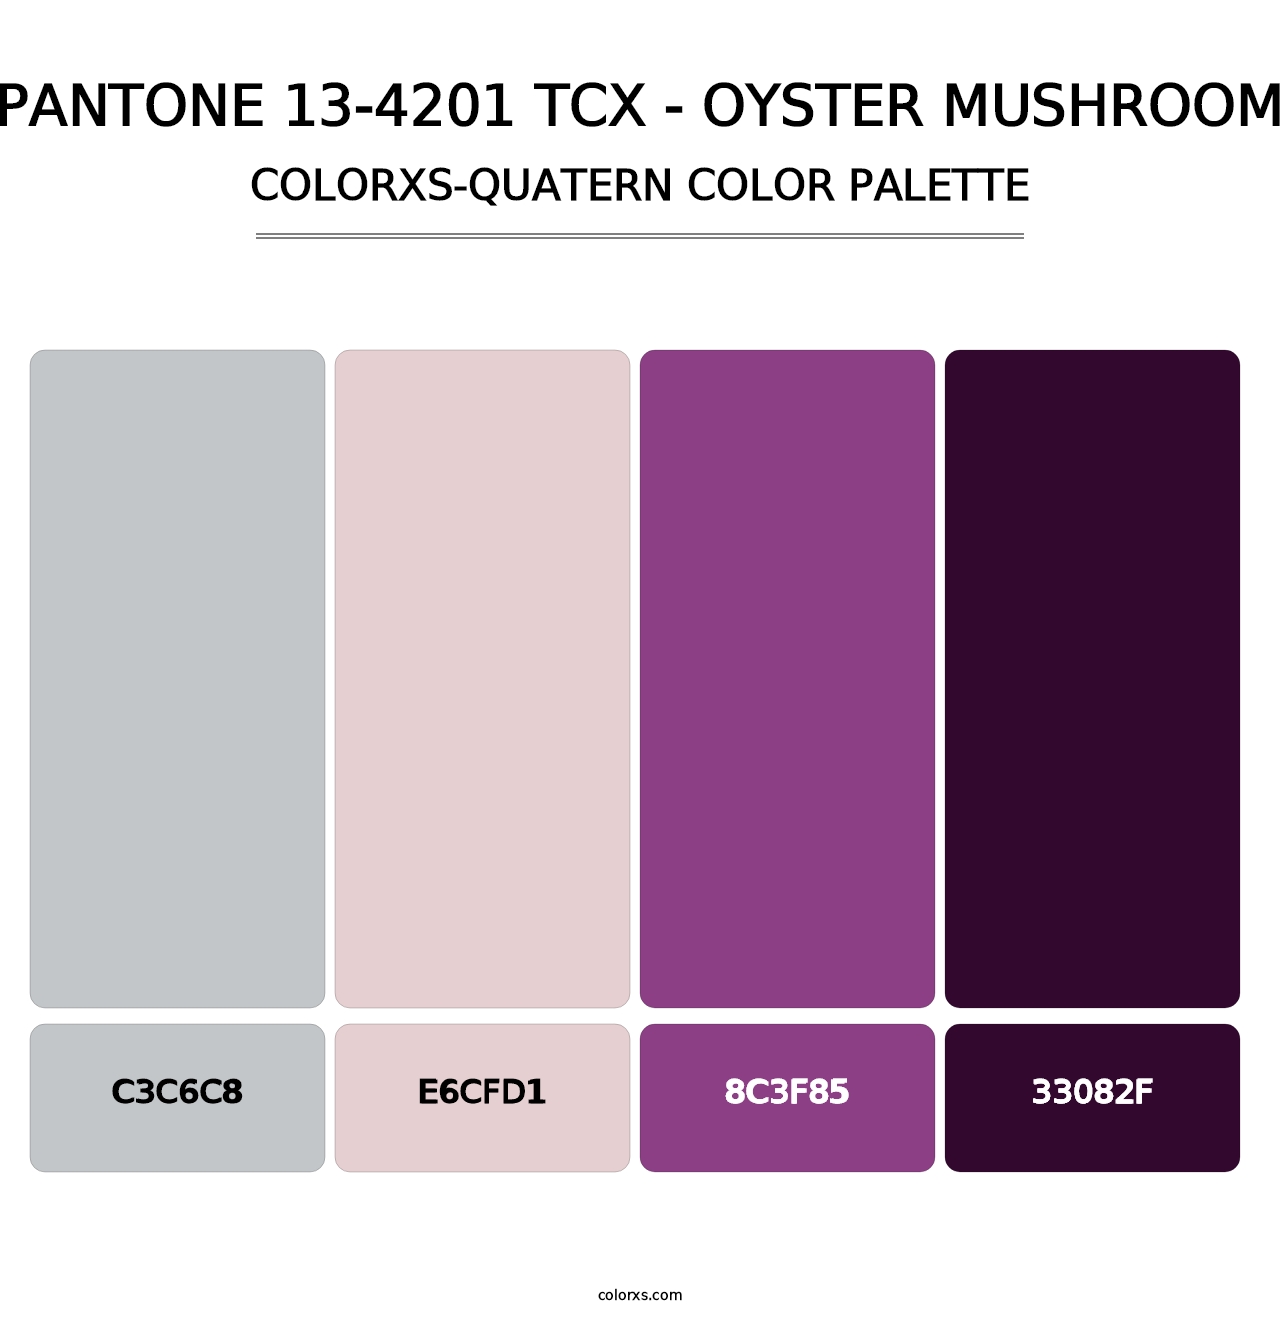 PANTONE 13-4201 TCX - Oyster Mushroom - Colorxs Quatern Palette